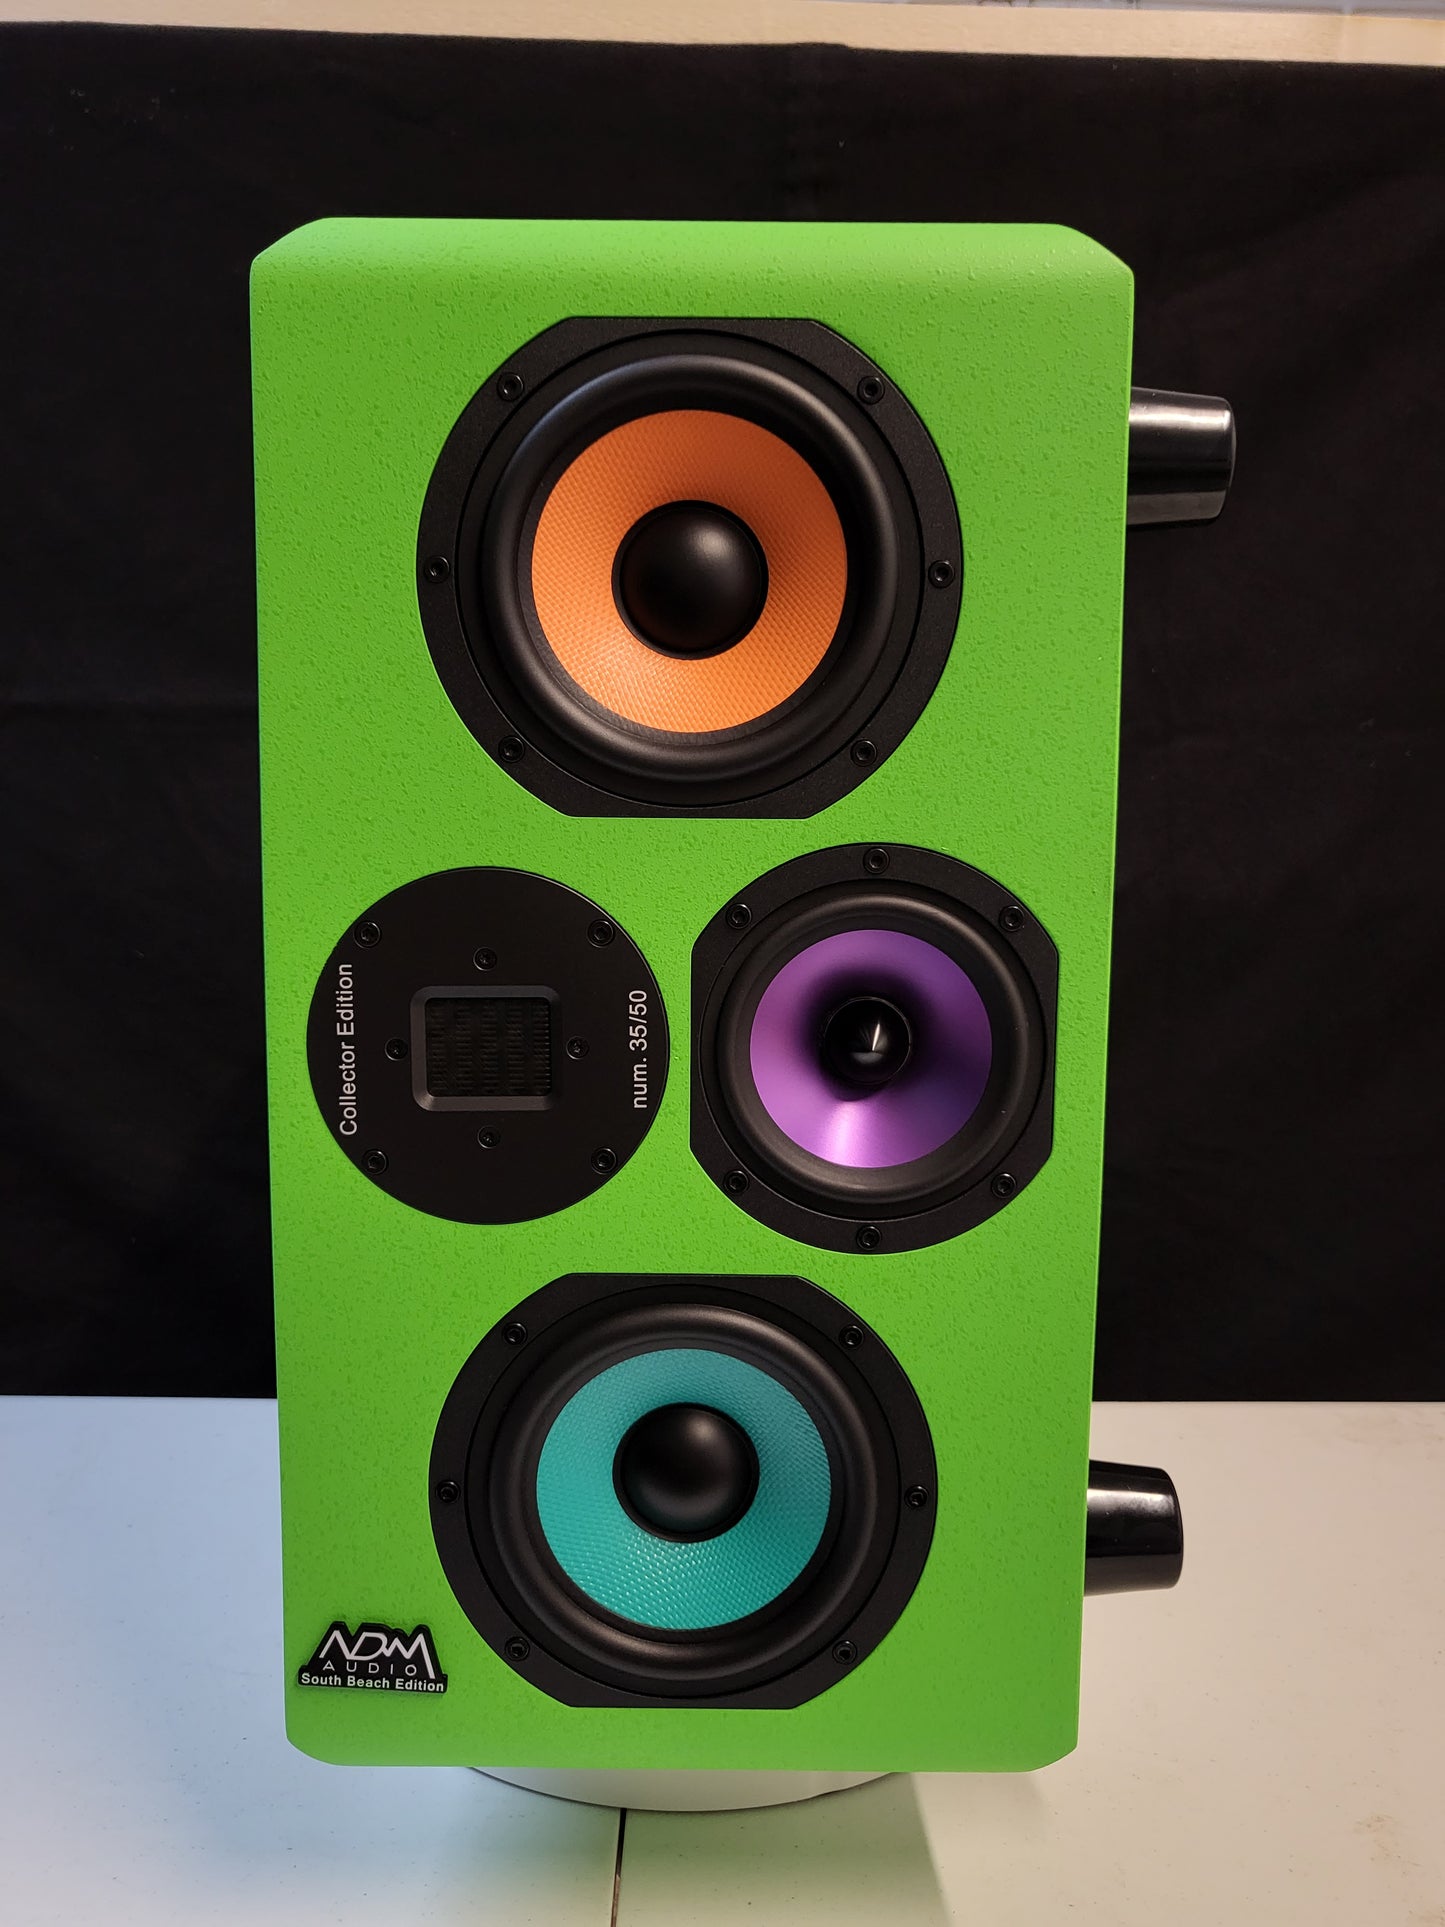 NDM Audio PR-X South Beach Edition [Neon Green]